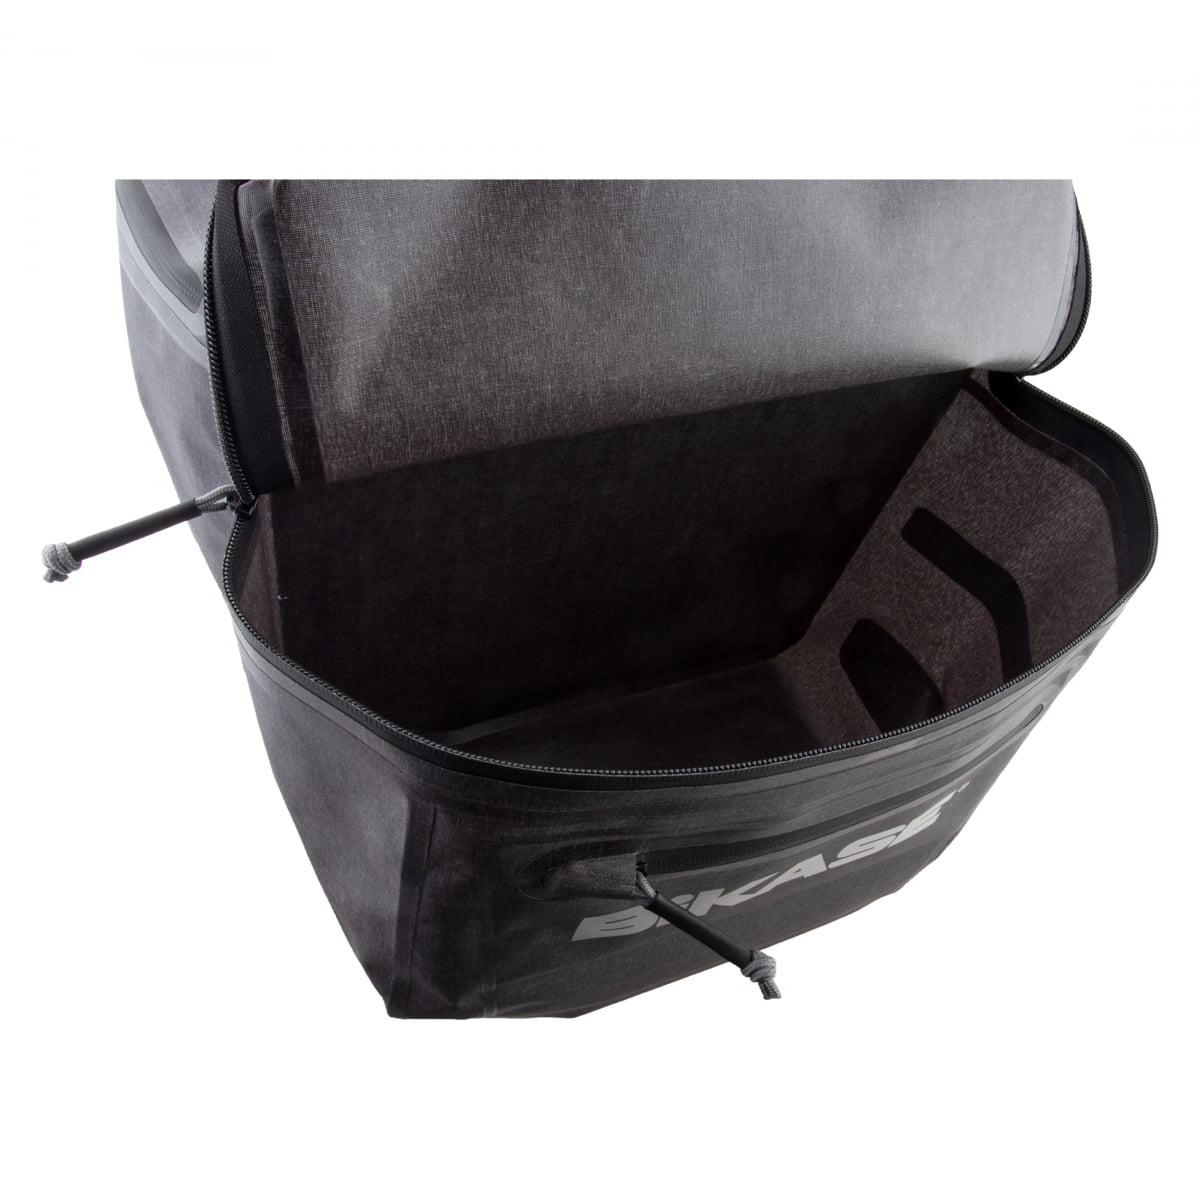 Bikase Urbanator Adjustable Panniers Bag Black 11.5x10.5x6` Bungee Straps 